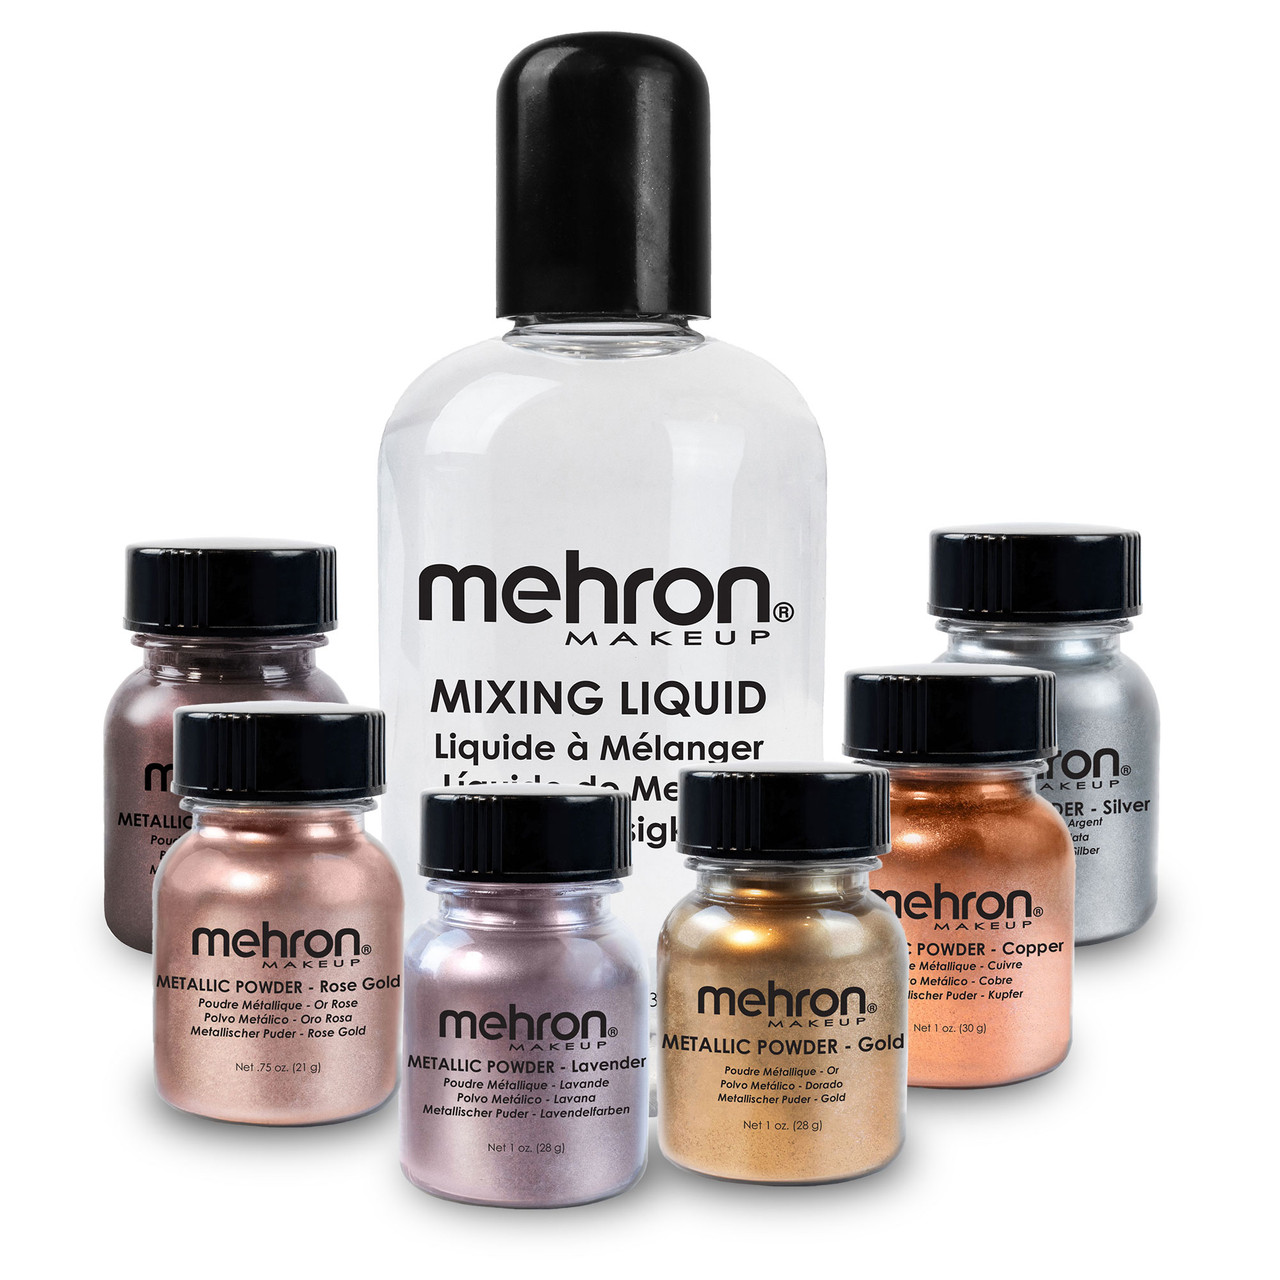 Mehron Mixing Liquid and Metallic powders